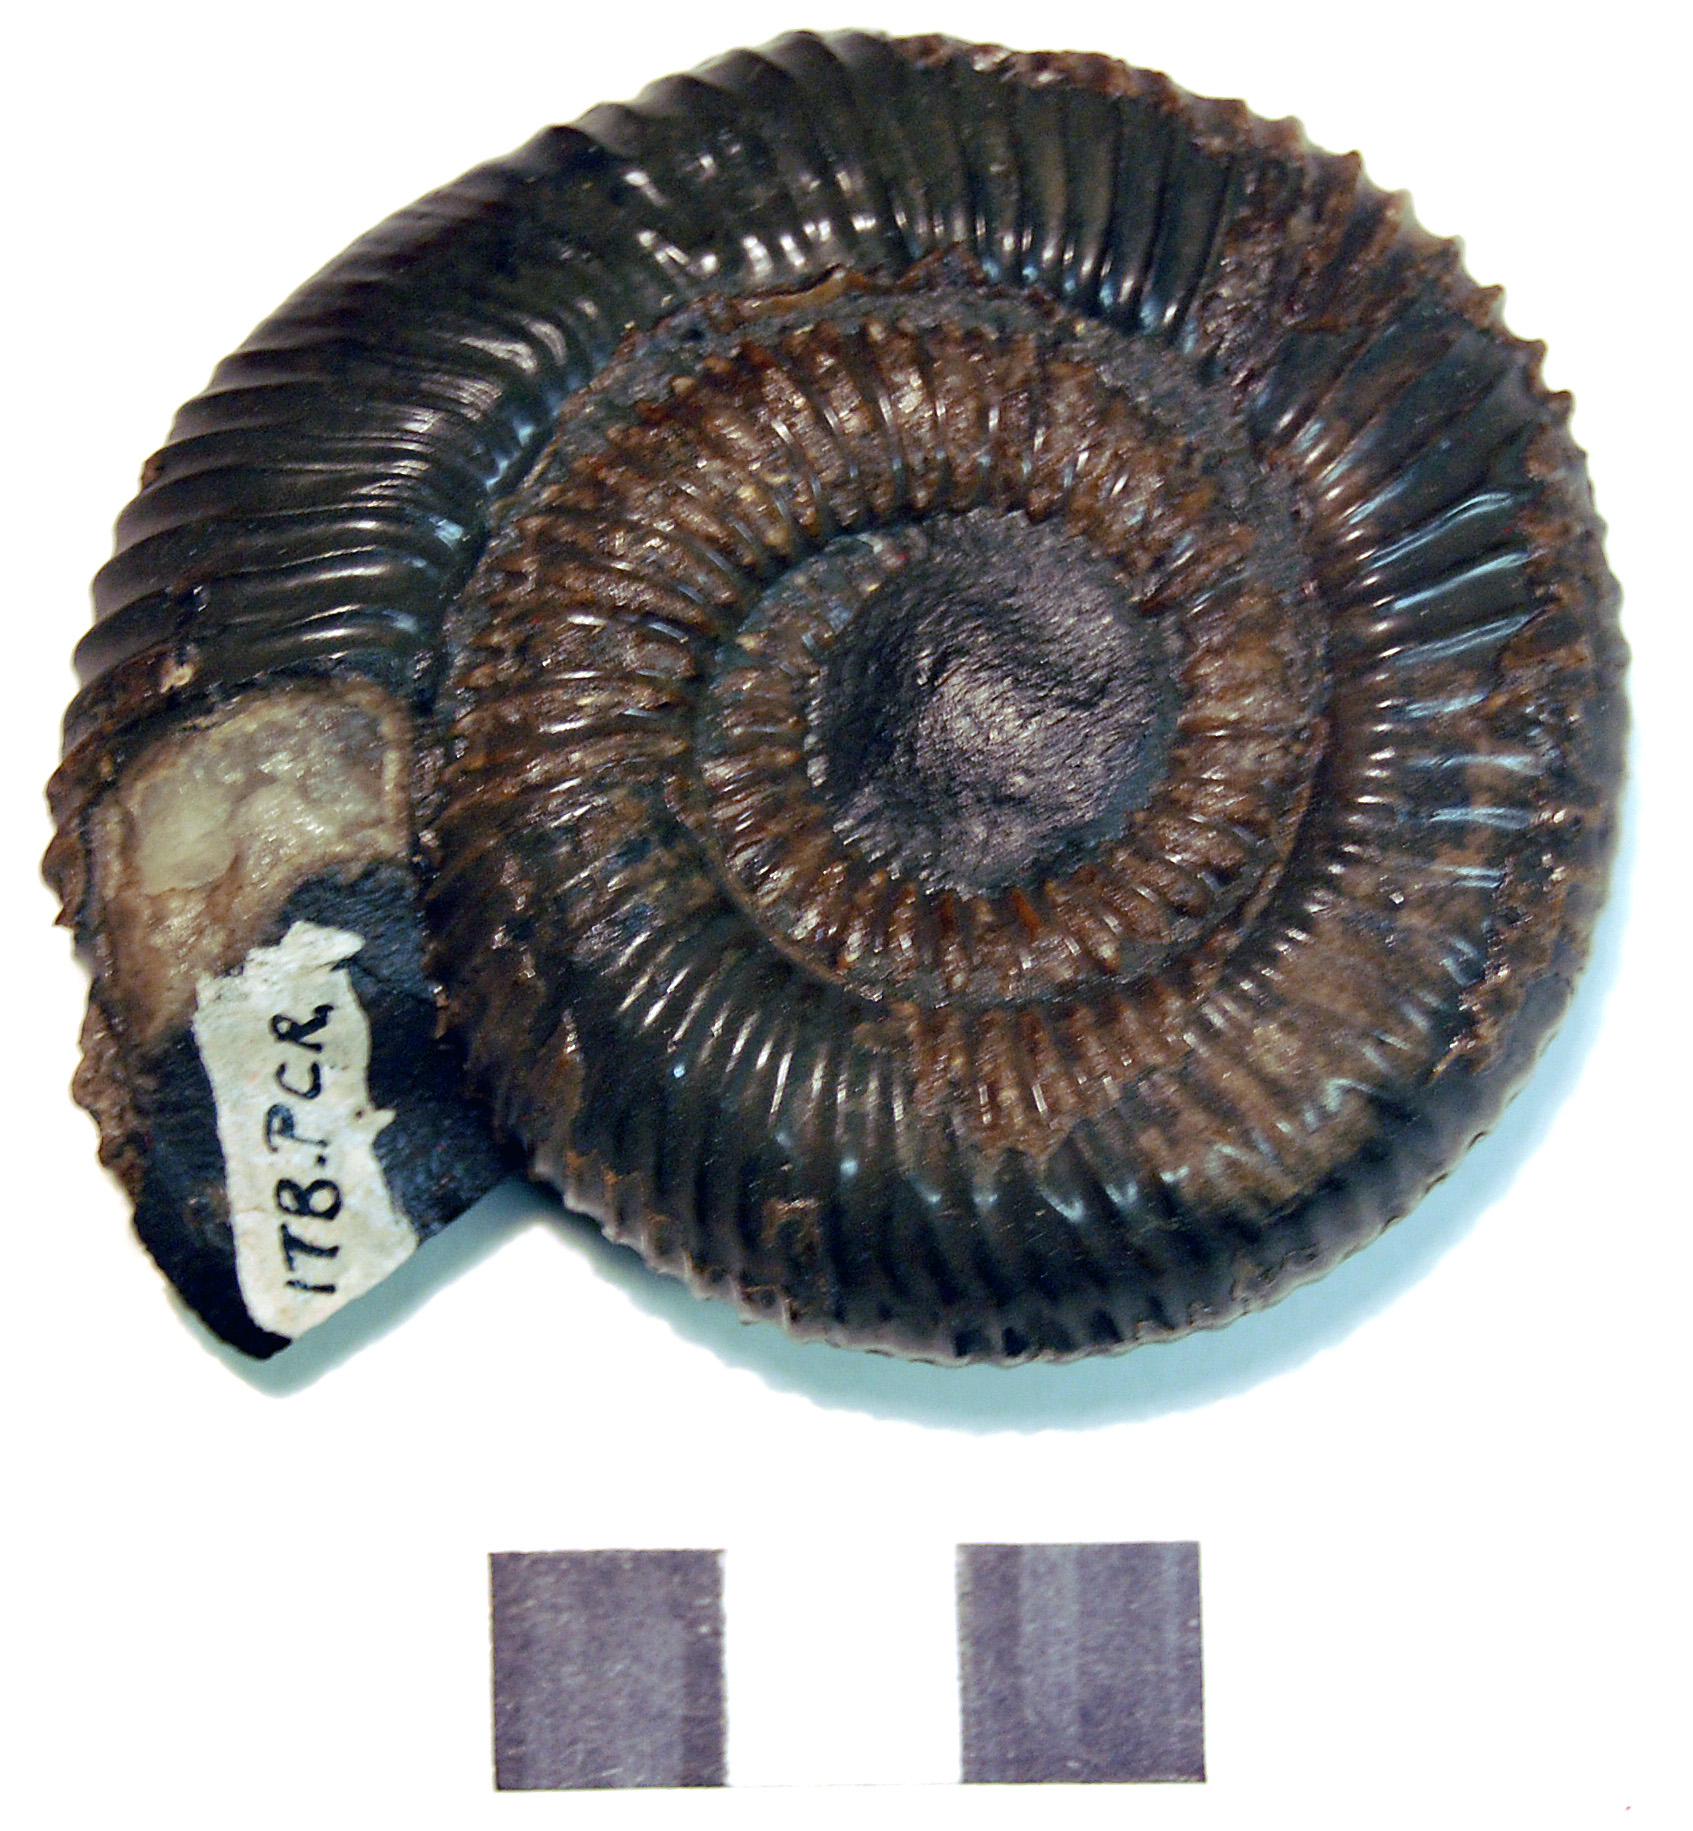 Photograph of ammounite: Coeloceras sp.